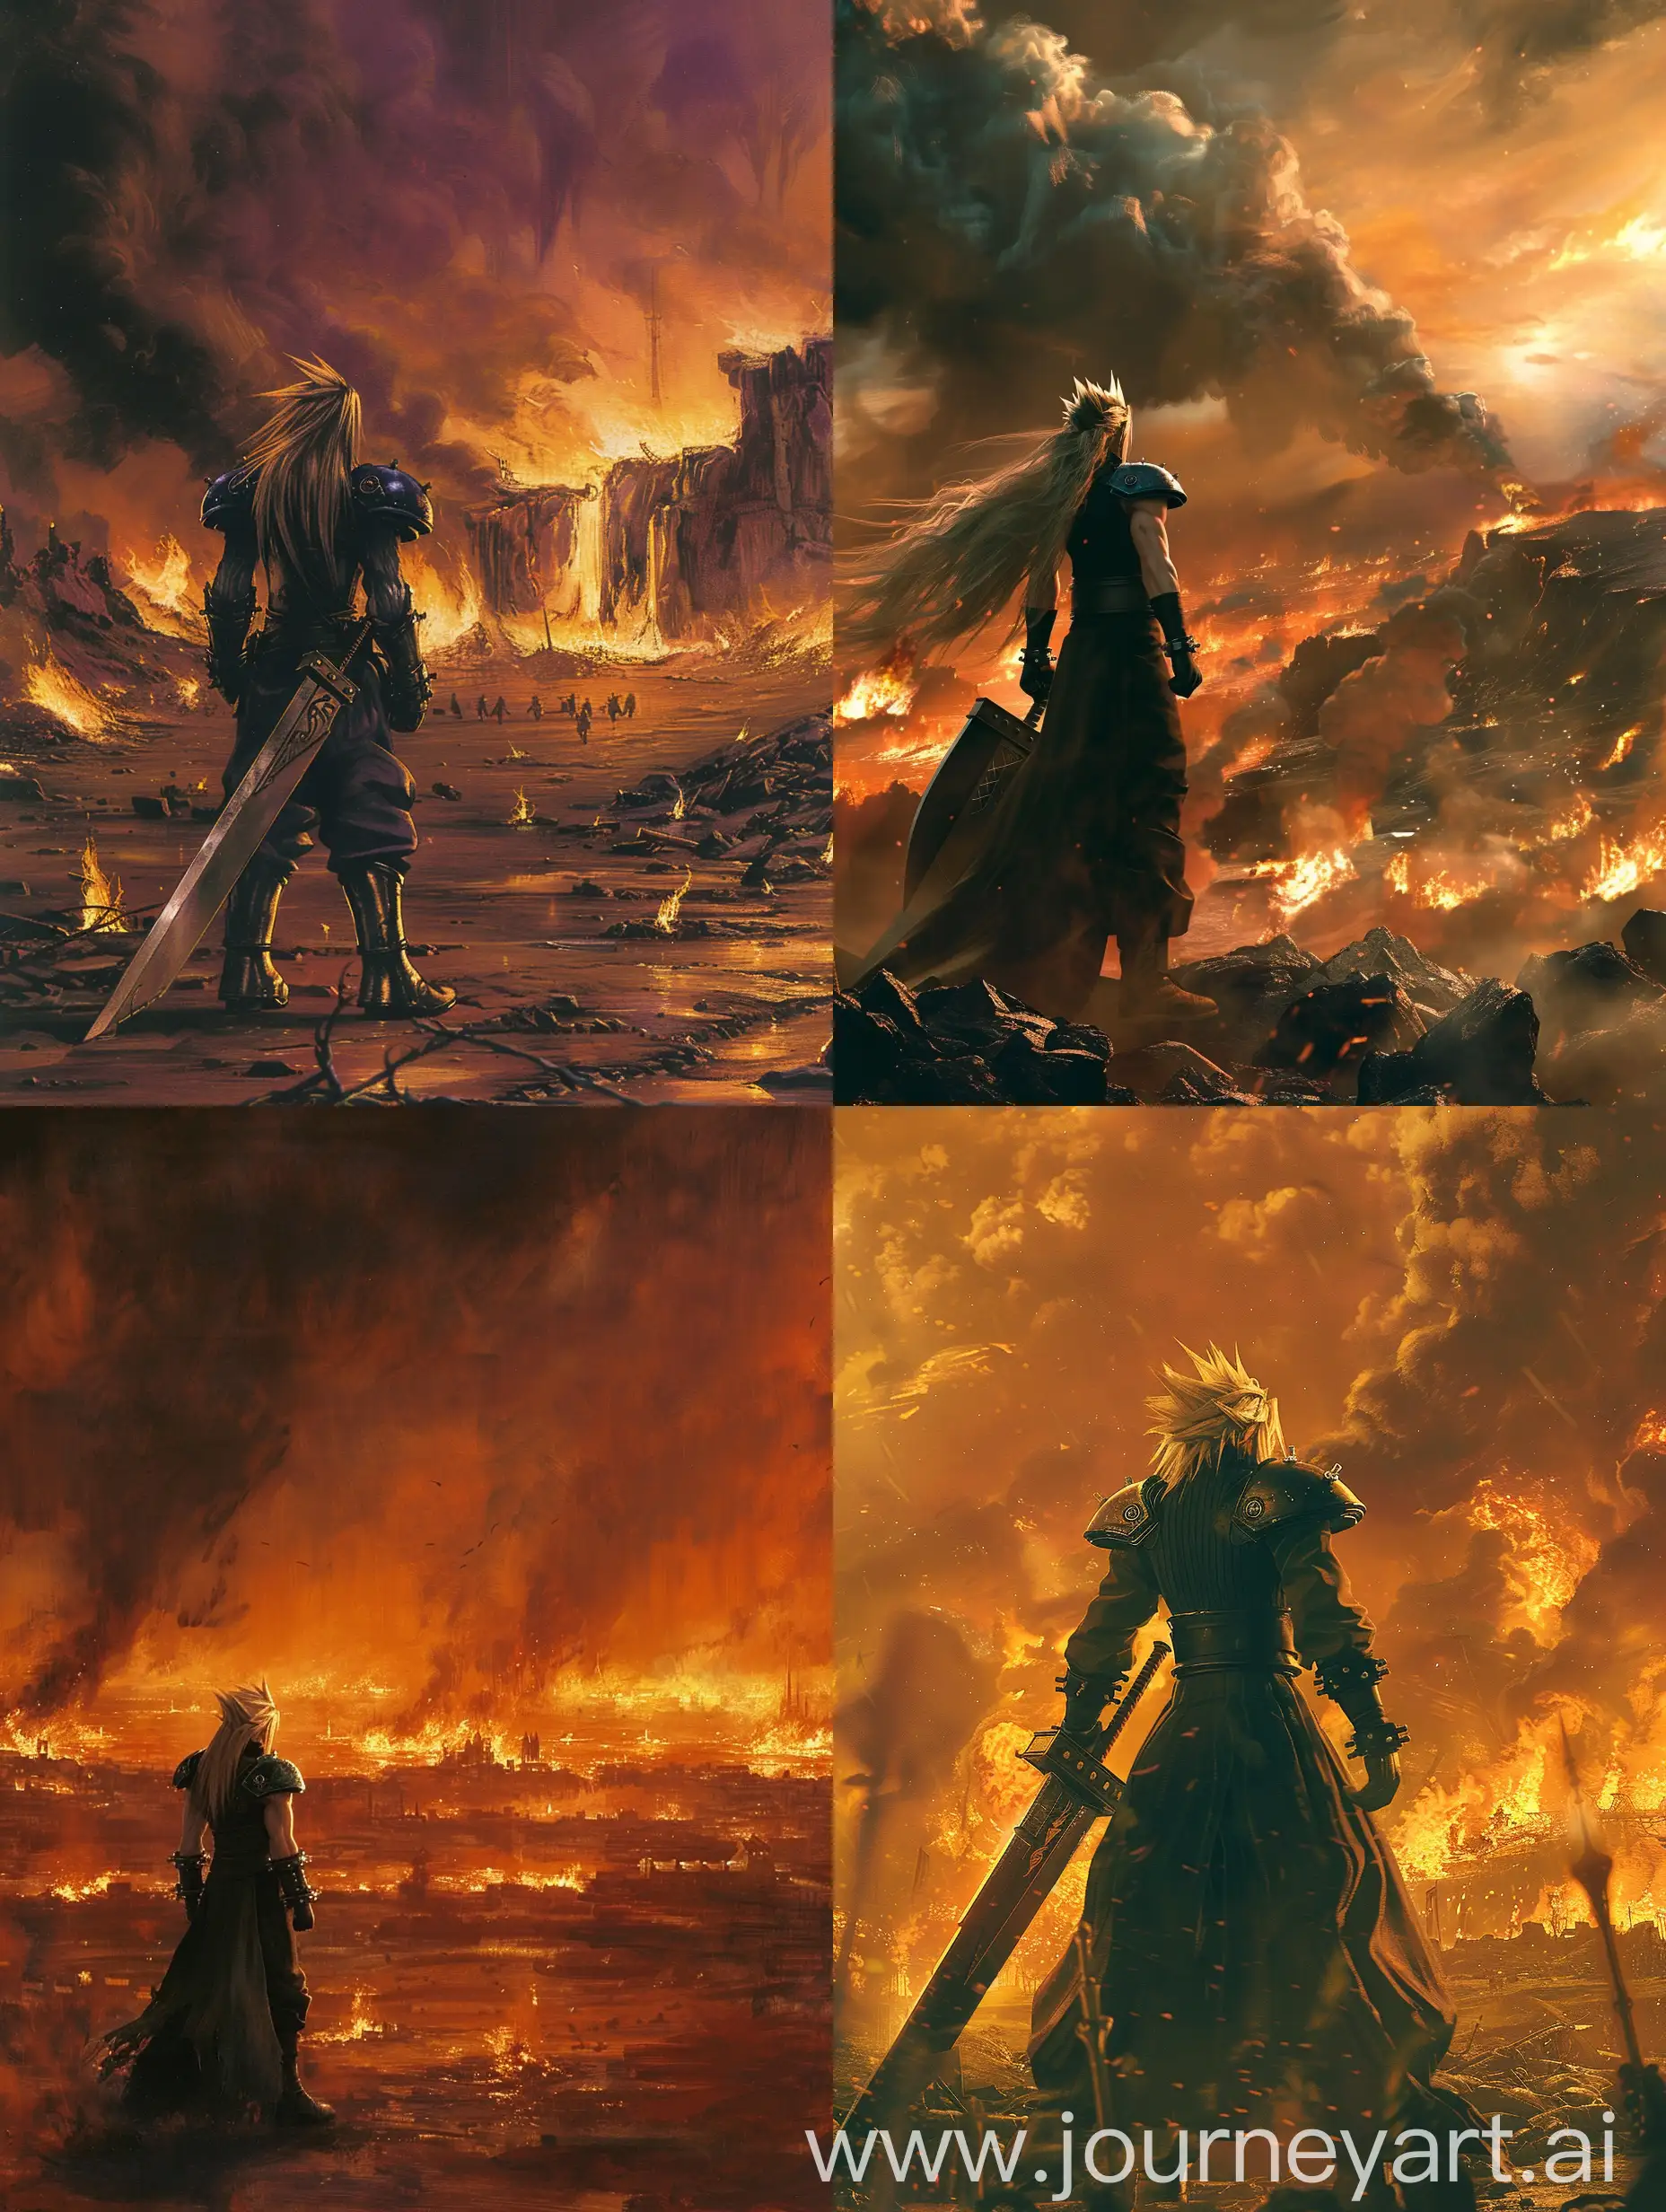 Golbez-from-Final-Fantasy-4-Standing-Before-Fiery-Landscape